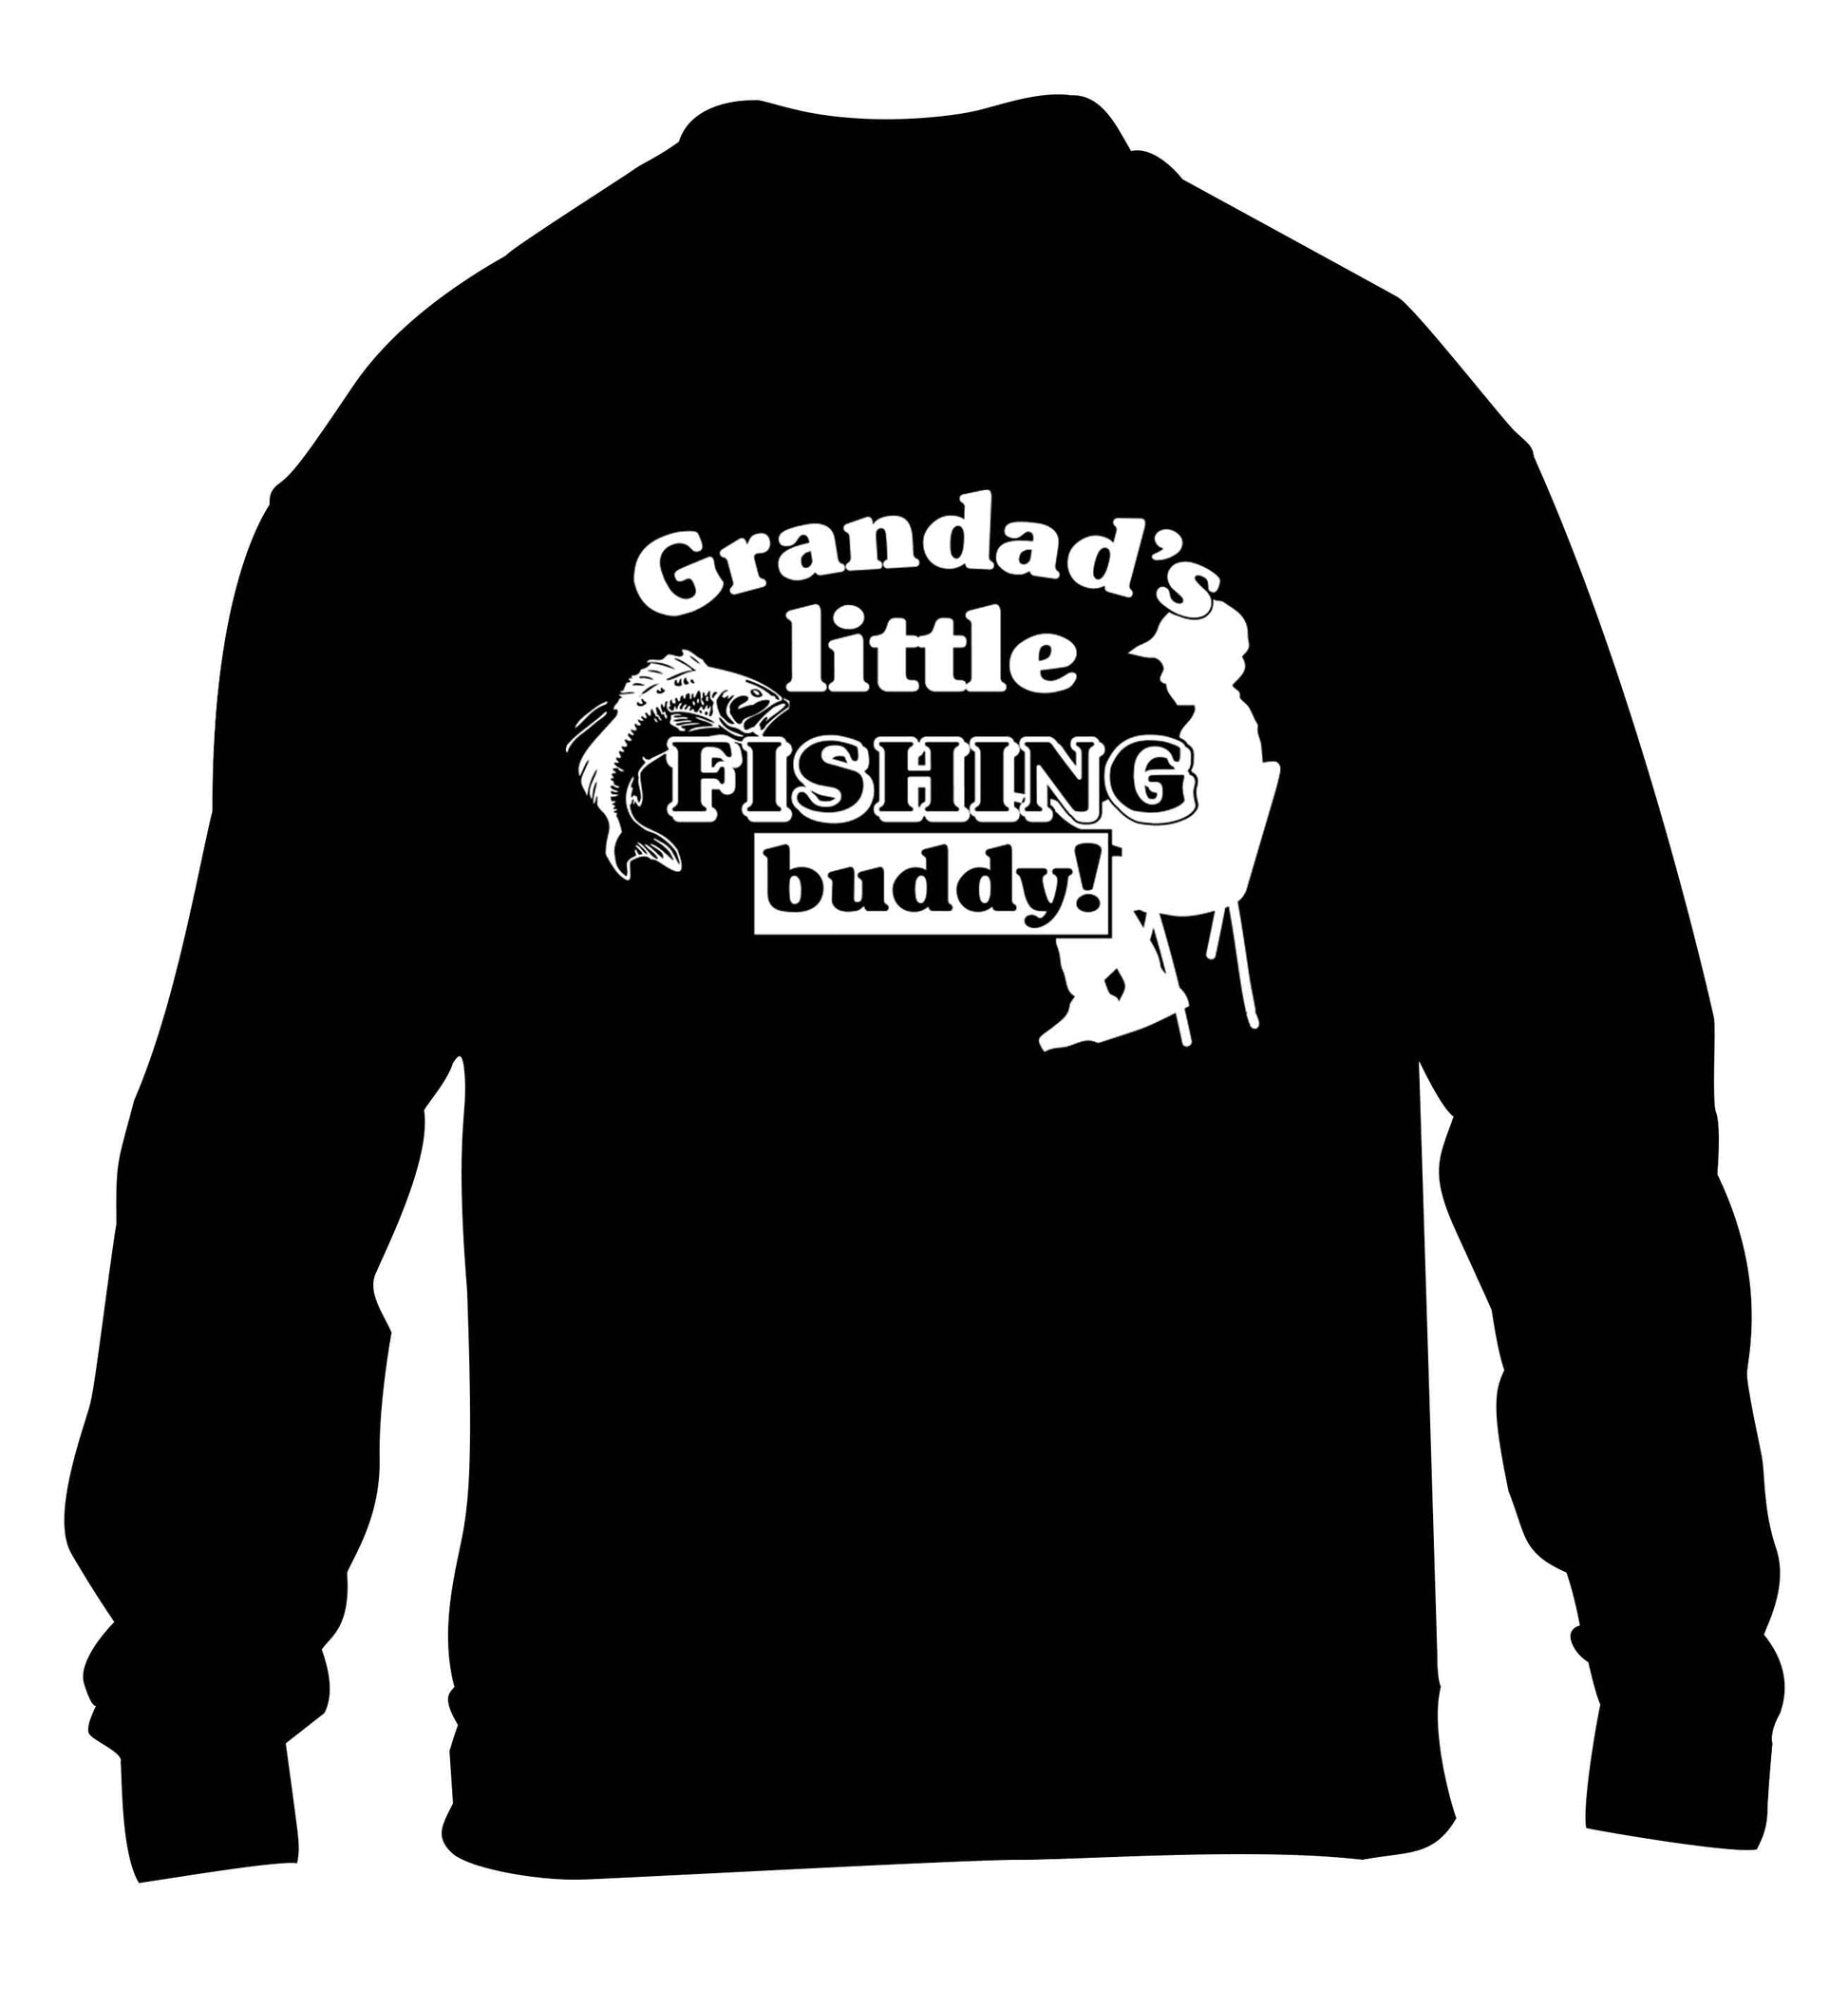 Grandad's little fishing buddy! children's black sweater 12-13 Years